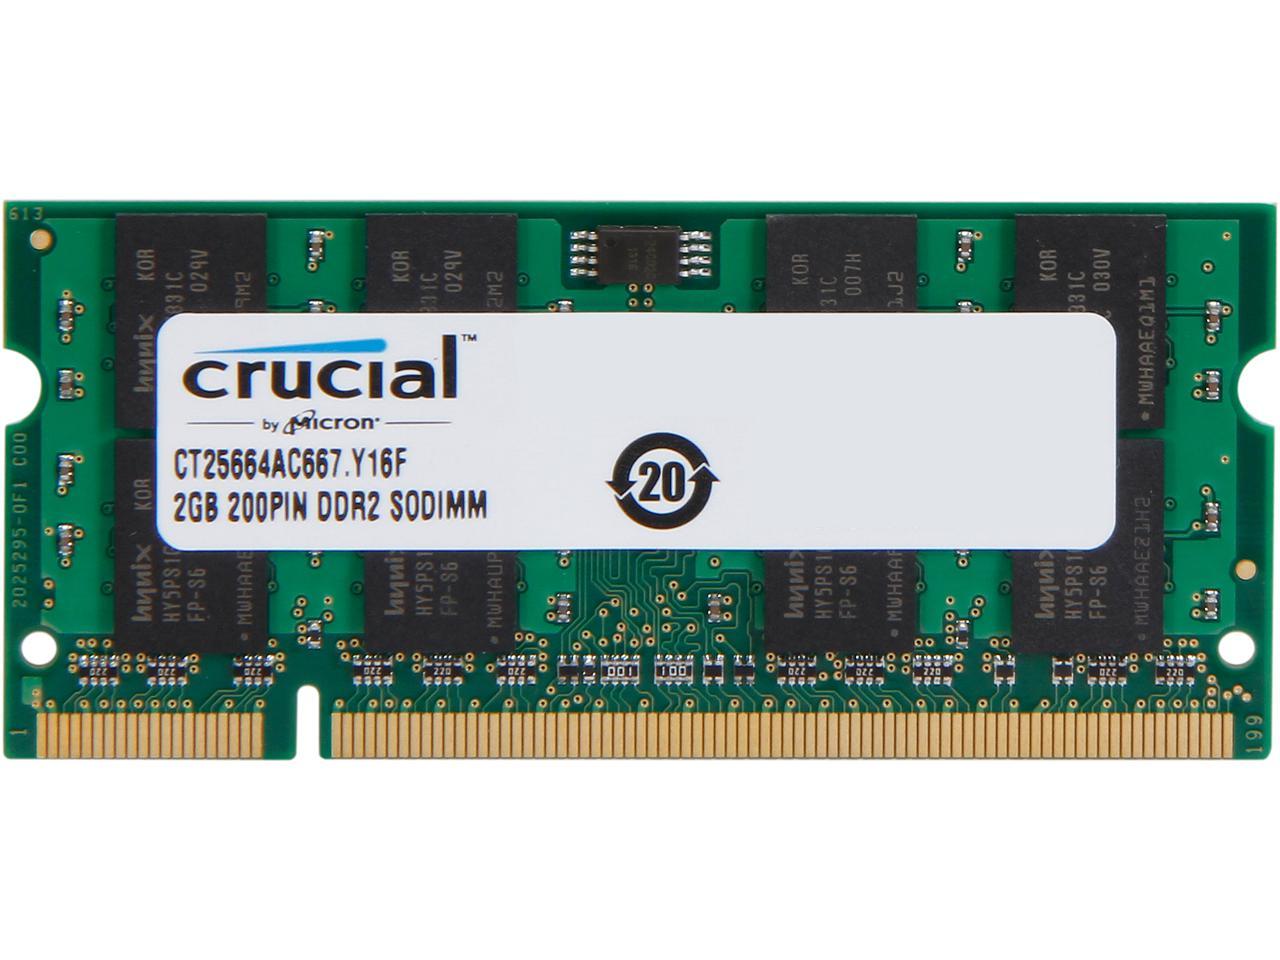 Crucial DDR2 2GB PC5300 Desktop Memory CT25664AA667.M16FM 